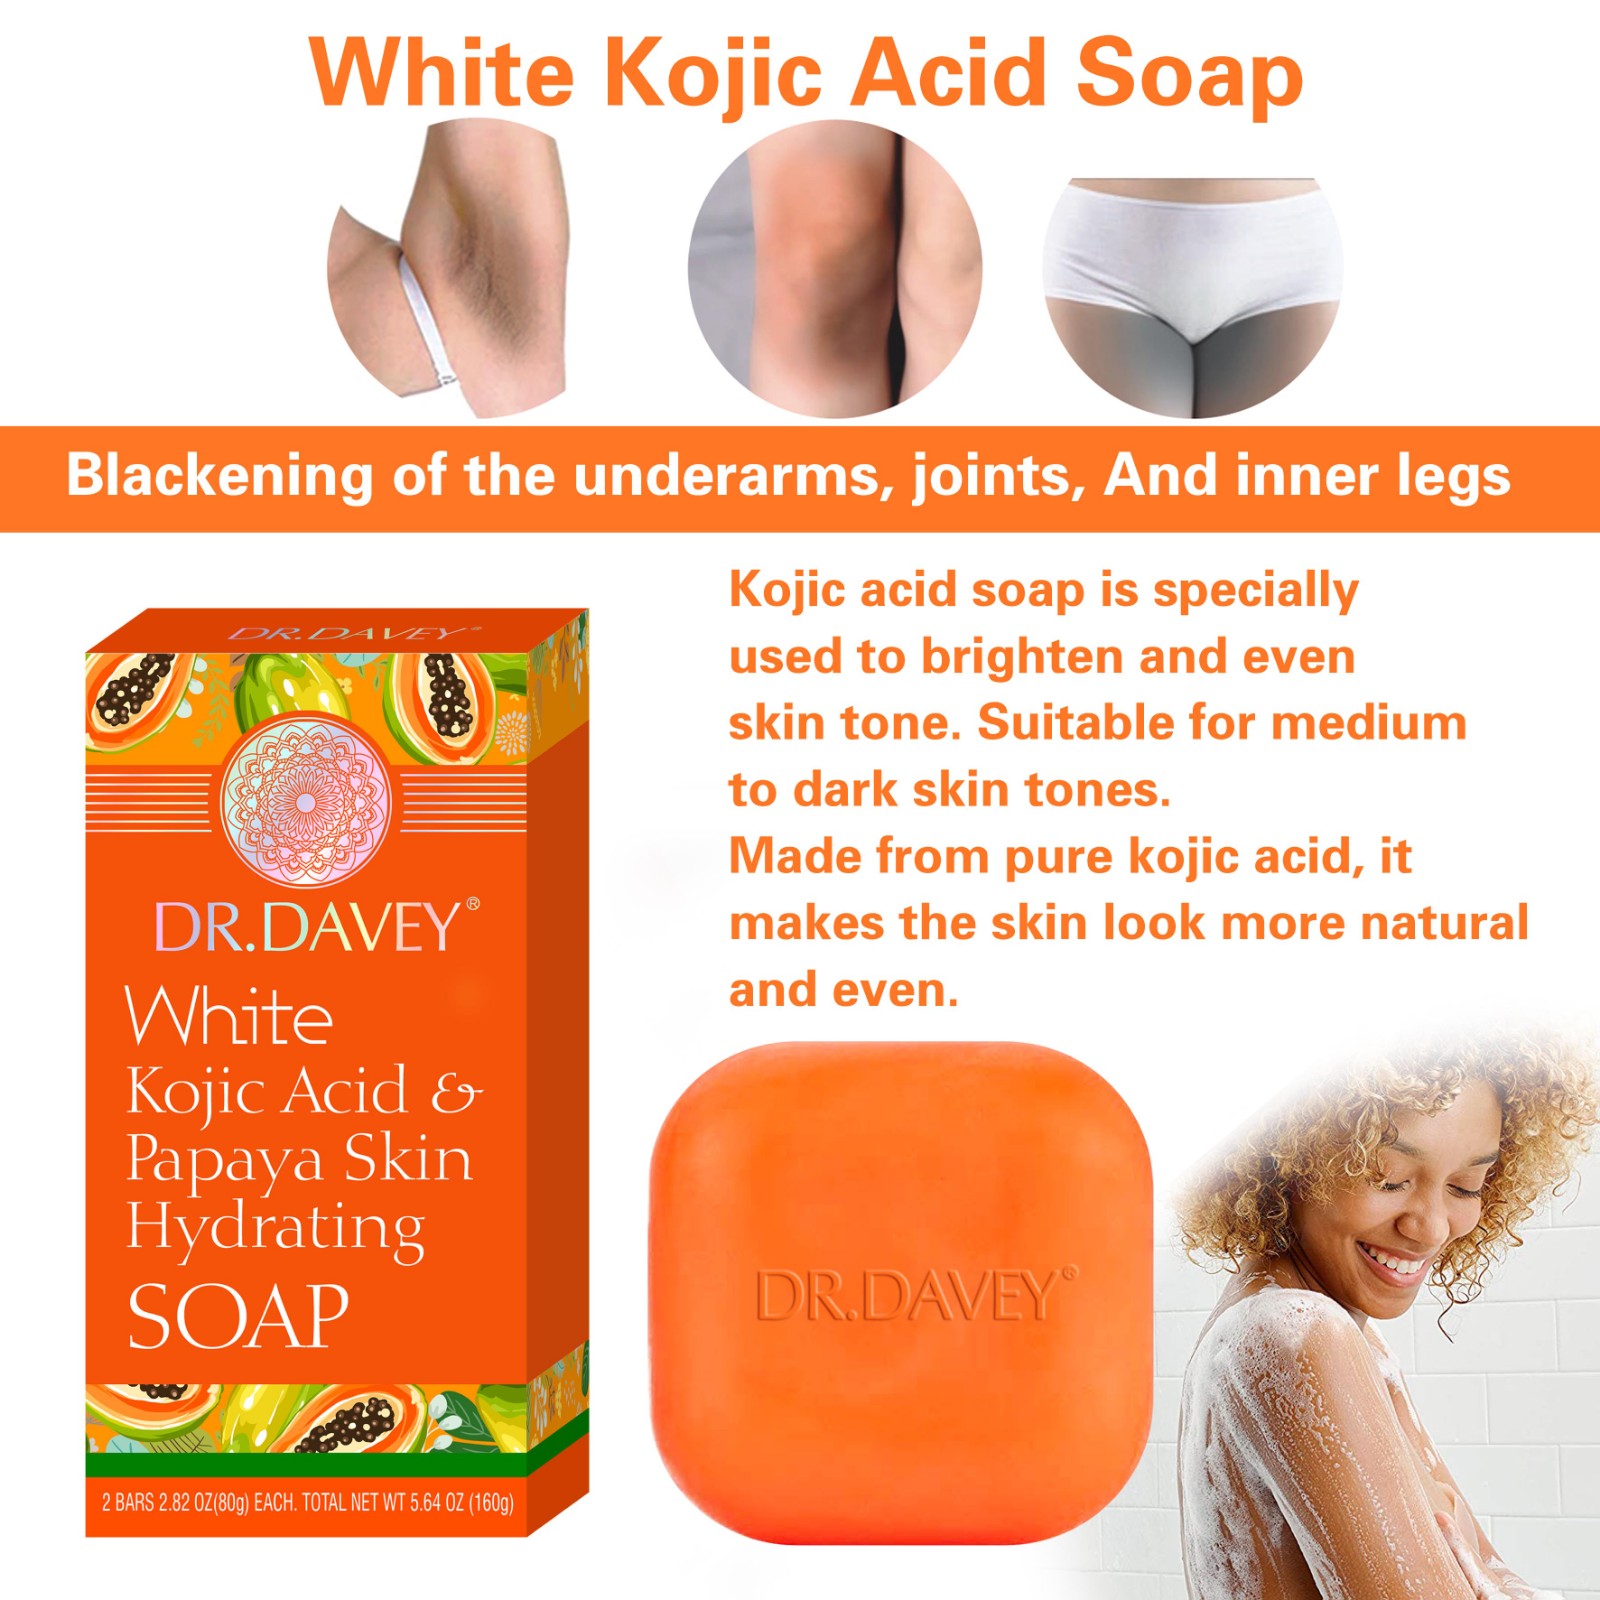 White kojic Acid & Papaya Skin Hydratin Soap